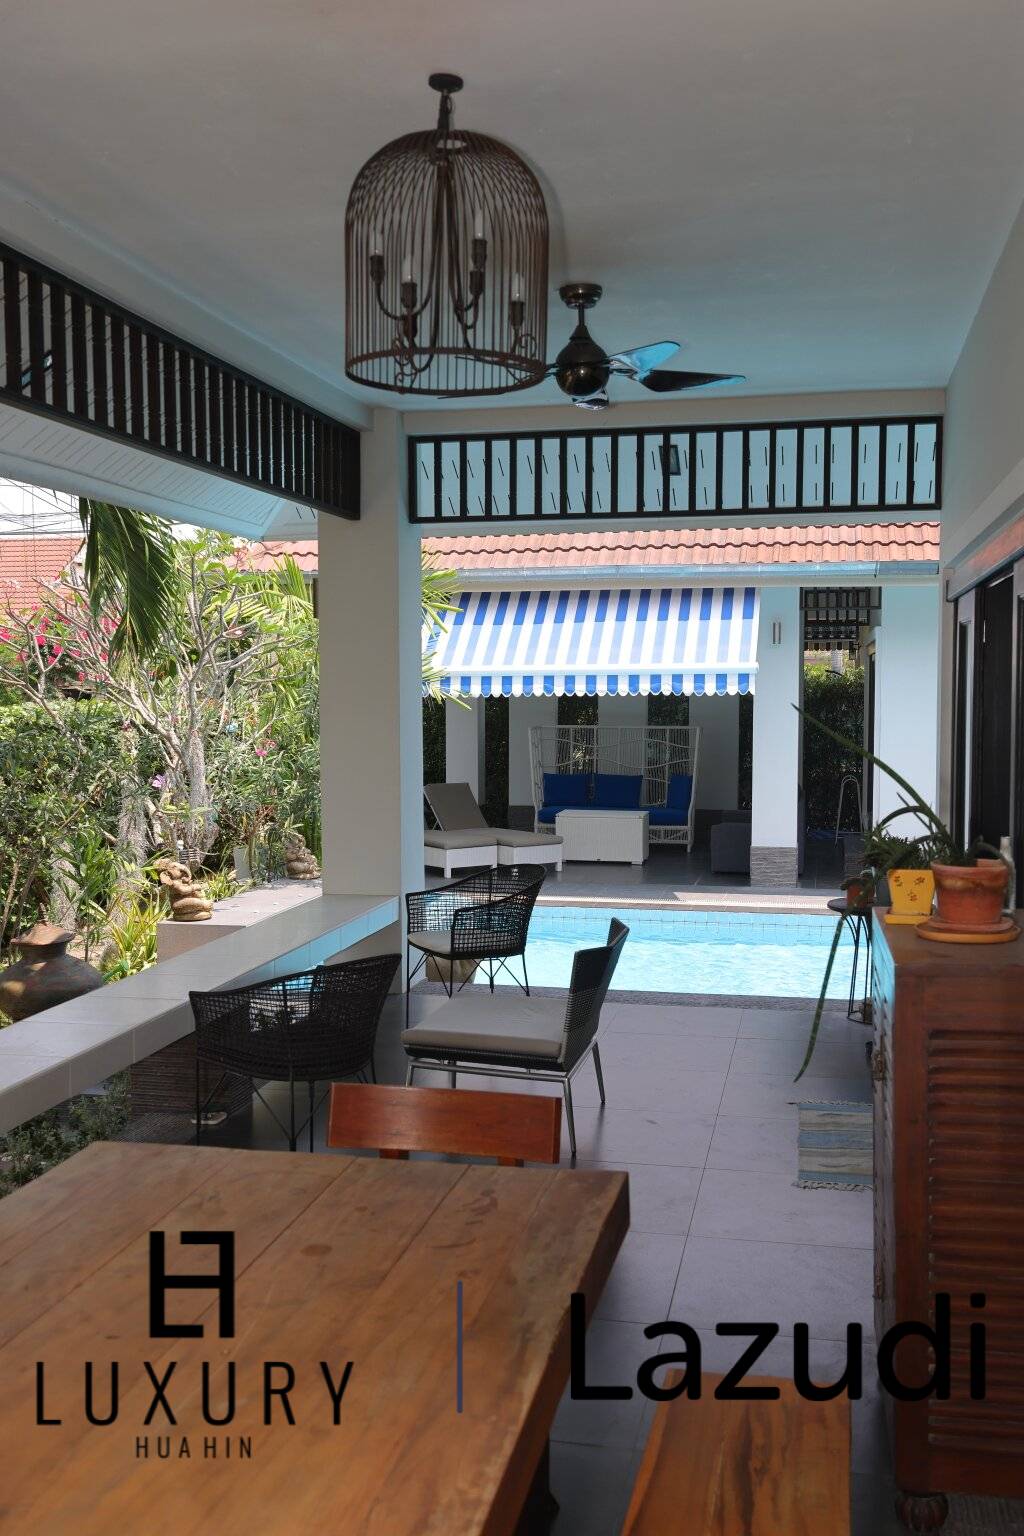 Smart House Village: 3 Bedroom Pool Villa